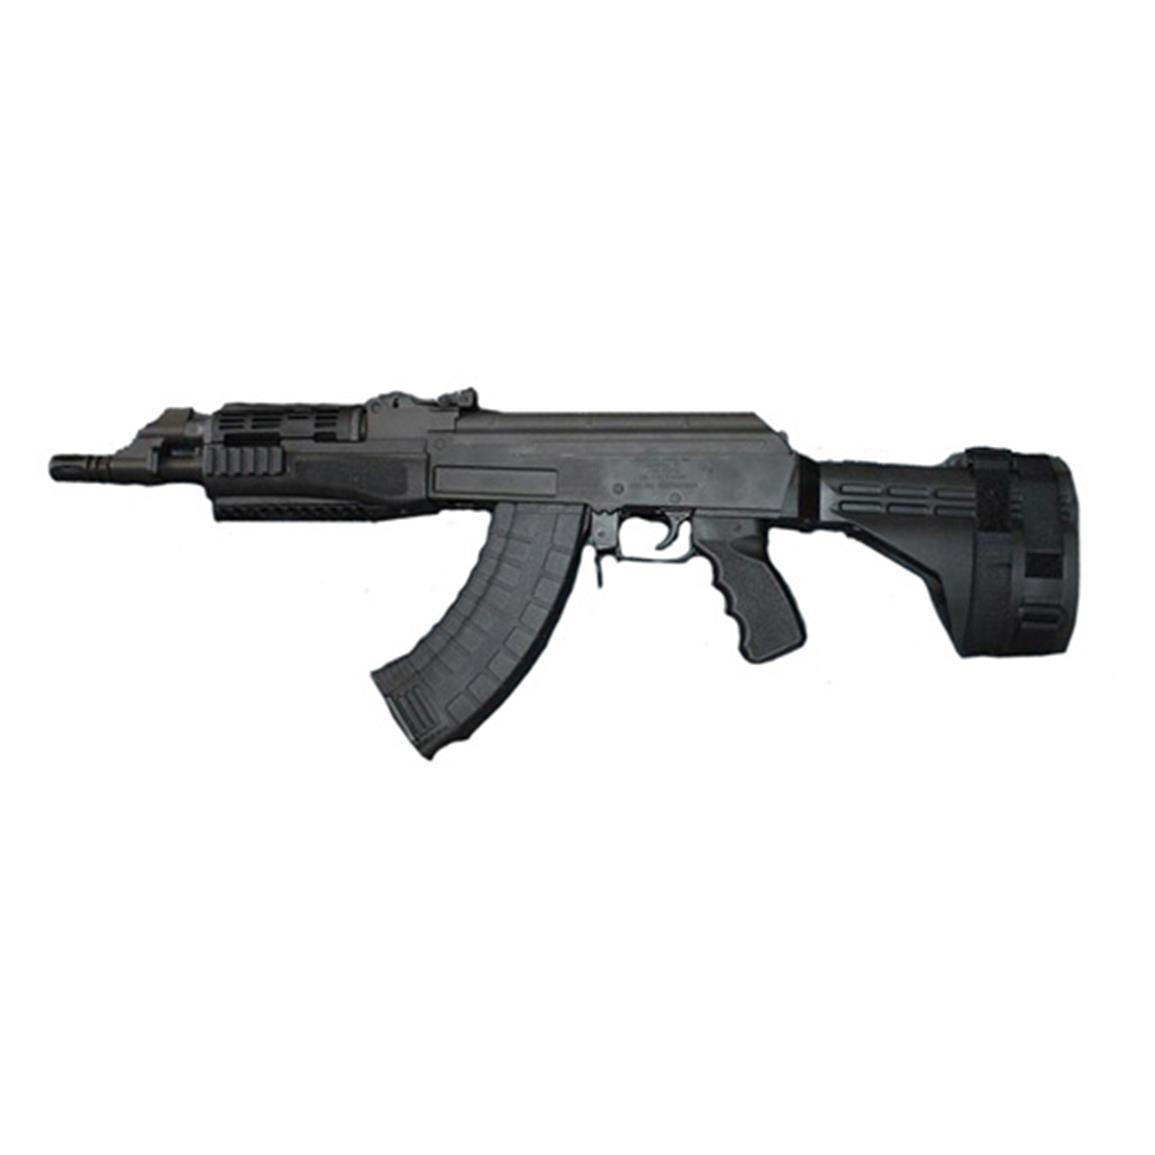 Century Arms C39 AK-47 Pistol, Semi-automatic, 7.62x39mm, HG3083CN, 787450233799, 11.375 inch Barrel